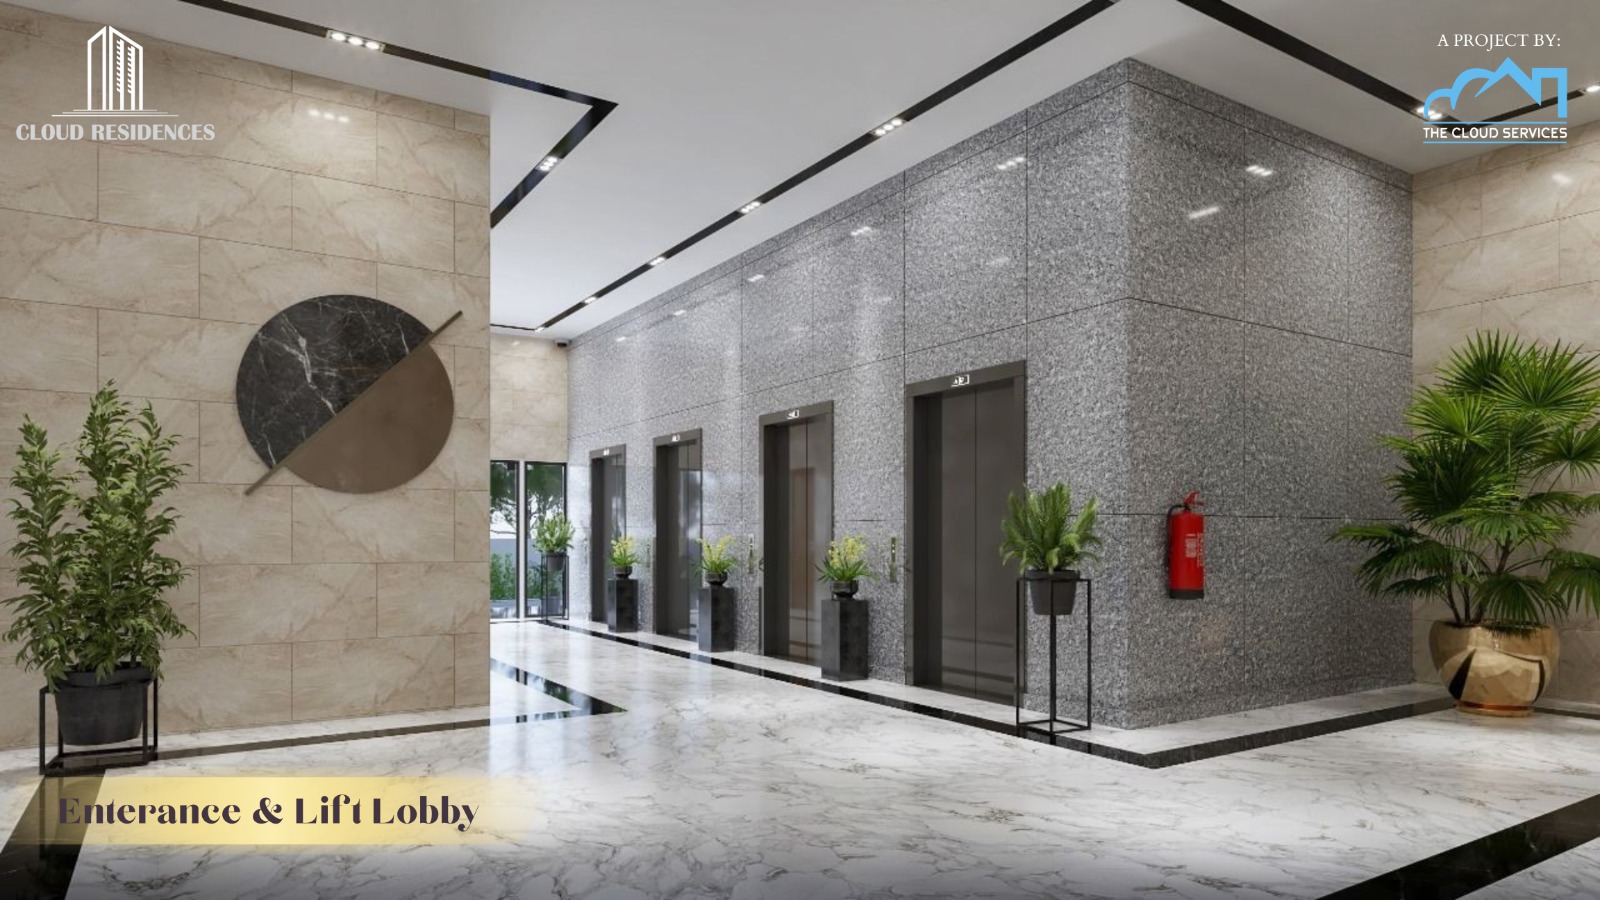 Entrance and lift lobby